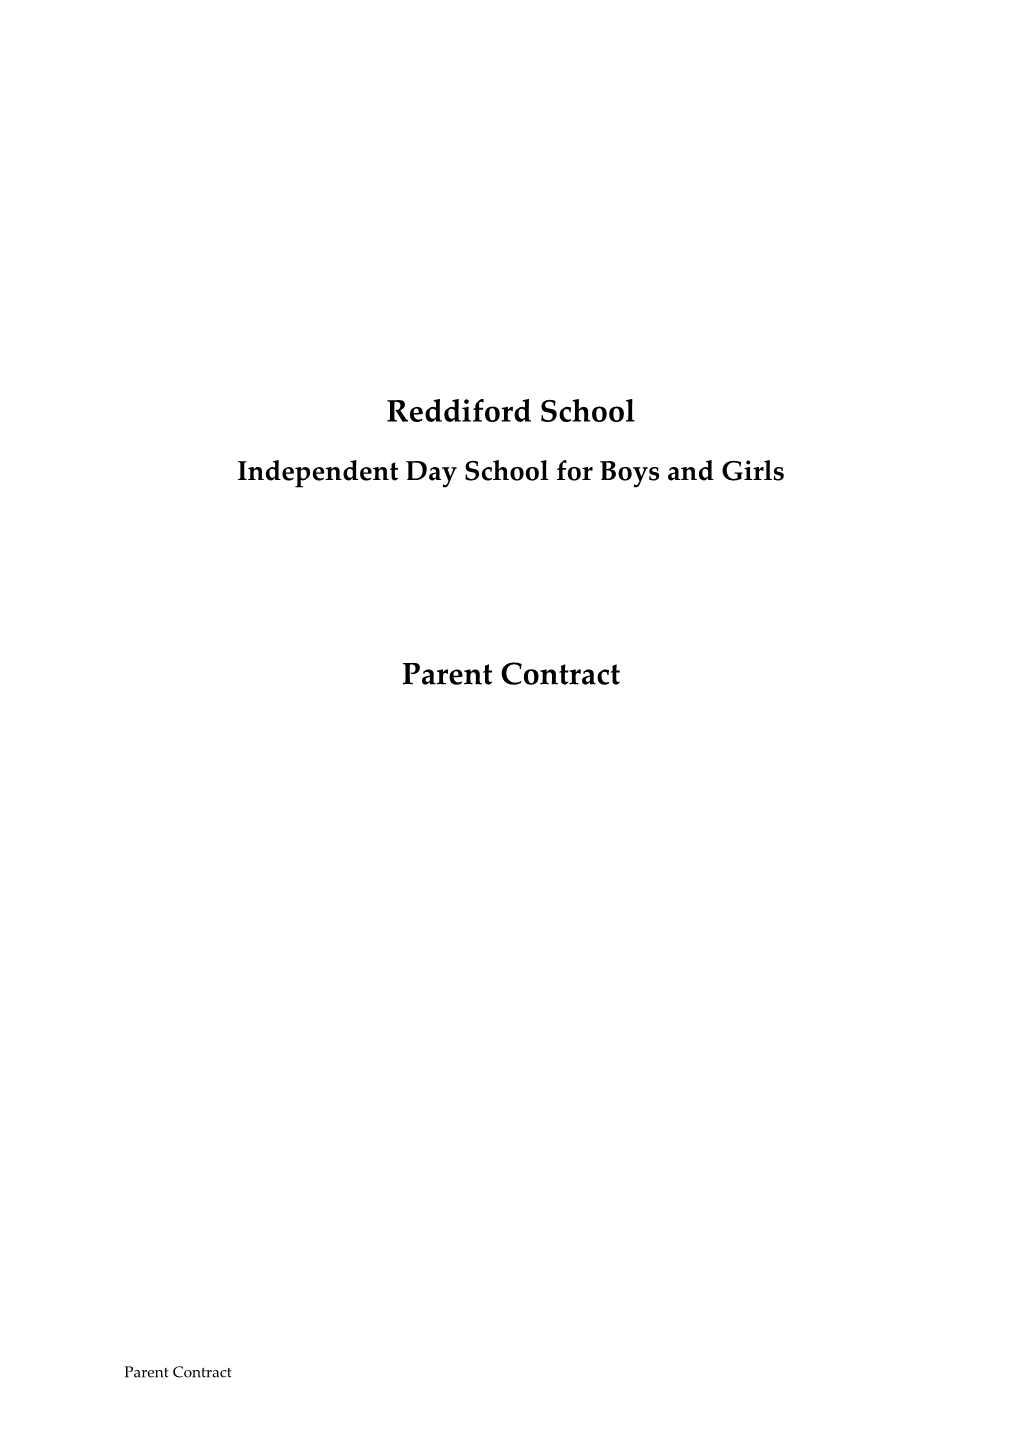 Education Team: Parent Contract V3 17 Sep 10